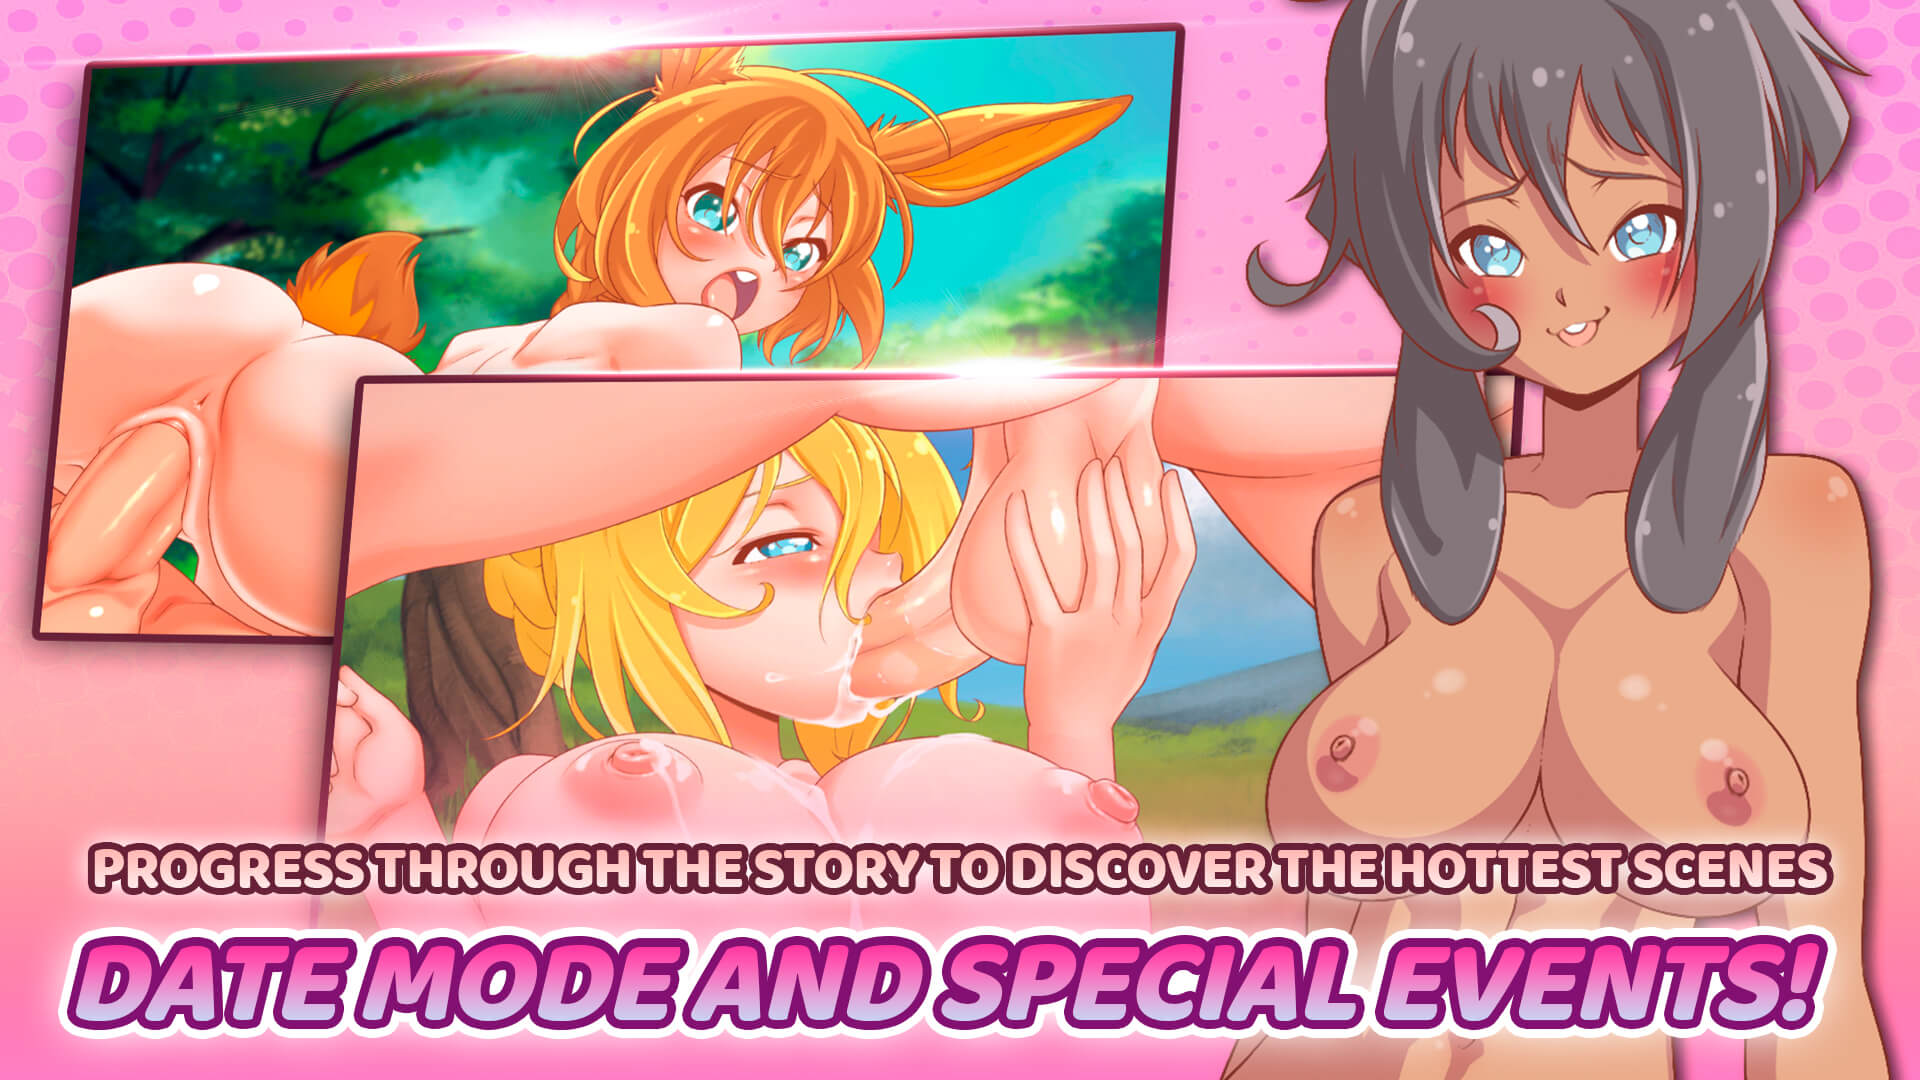 Nude Fantasy Game - Eros Fantasy - Idle Sex Game with APK file | Nutaku